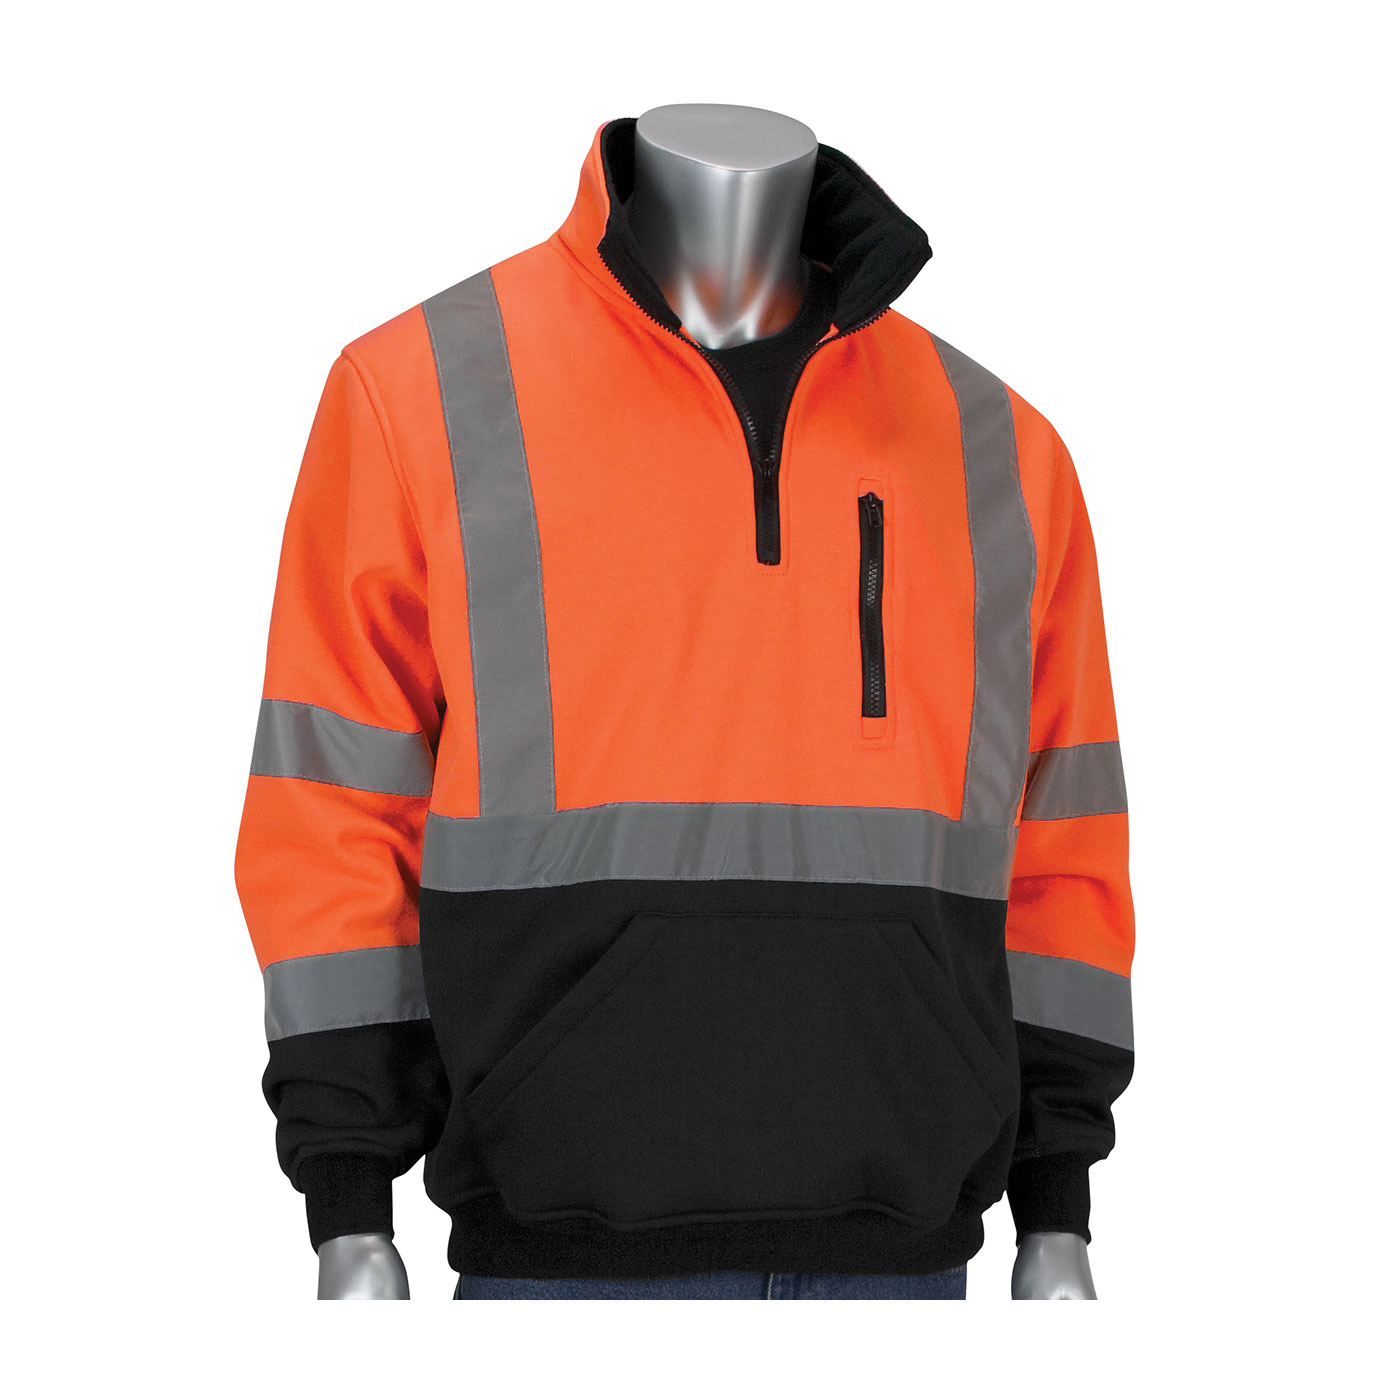 PIP® 323-1330B-OR/M Sweatshirt With Black Bottom, Unisex, M, Orange, 29.1 in L, Polyester Fleece